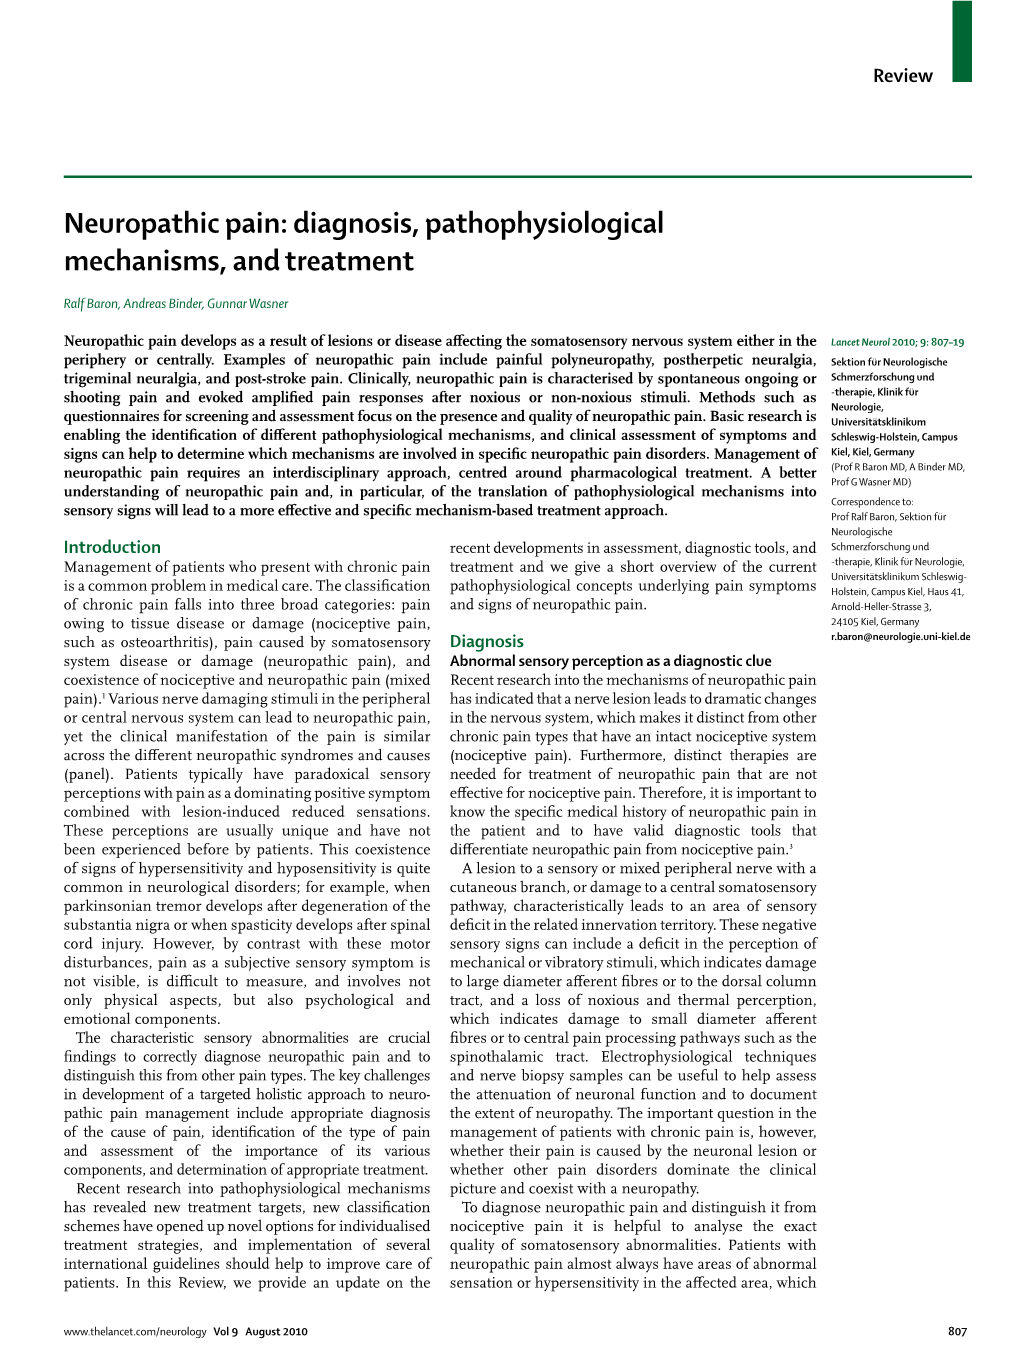 Neuropathic Pain: Diagnosis, Pathophysiological Mechanisms, and Treatment